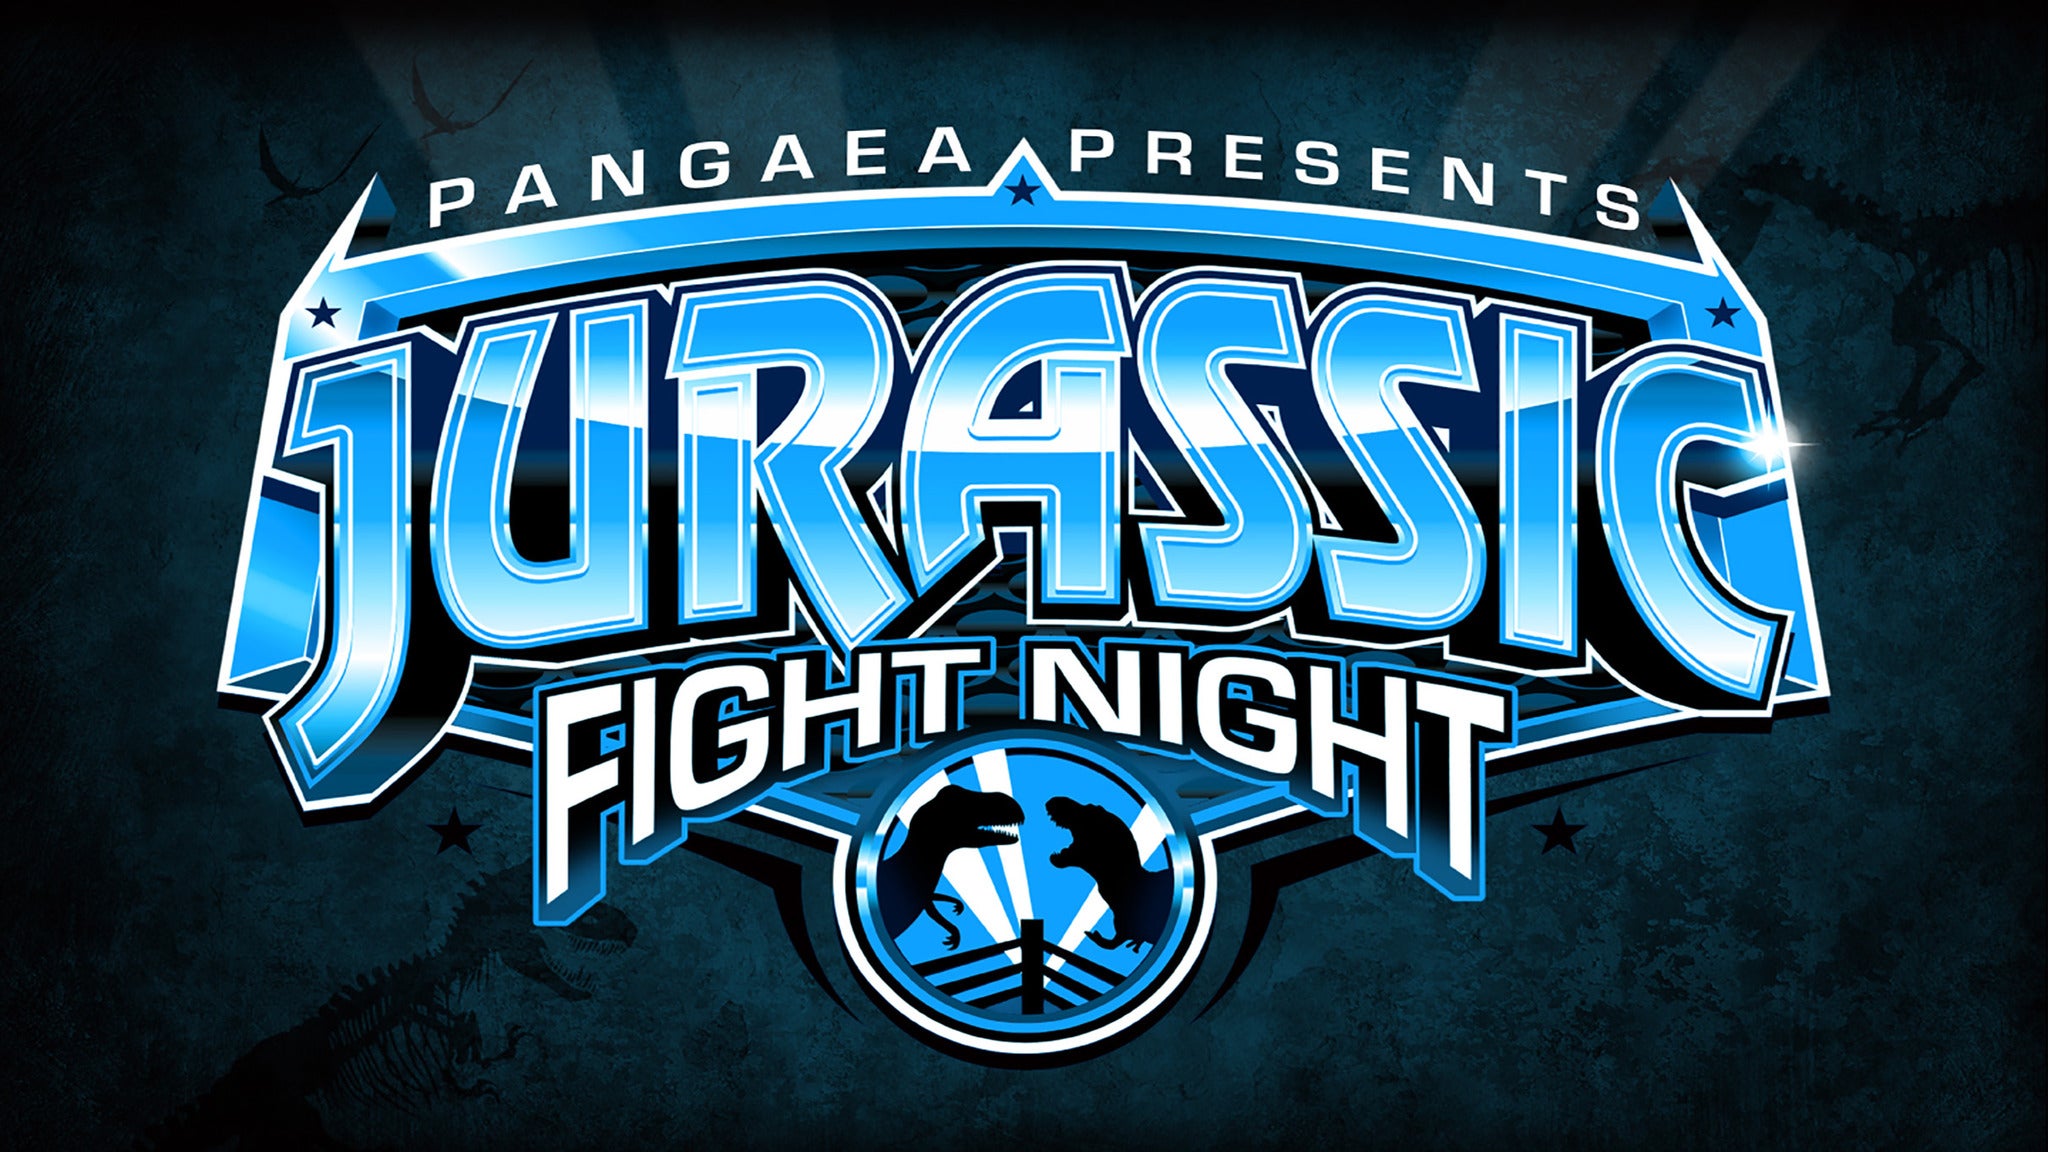 Jurassic Fight Night in Glendale event information